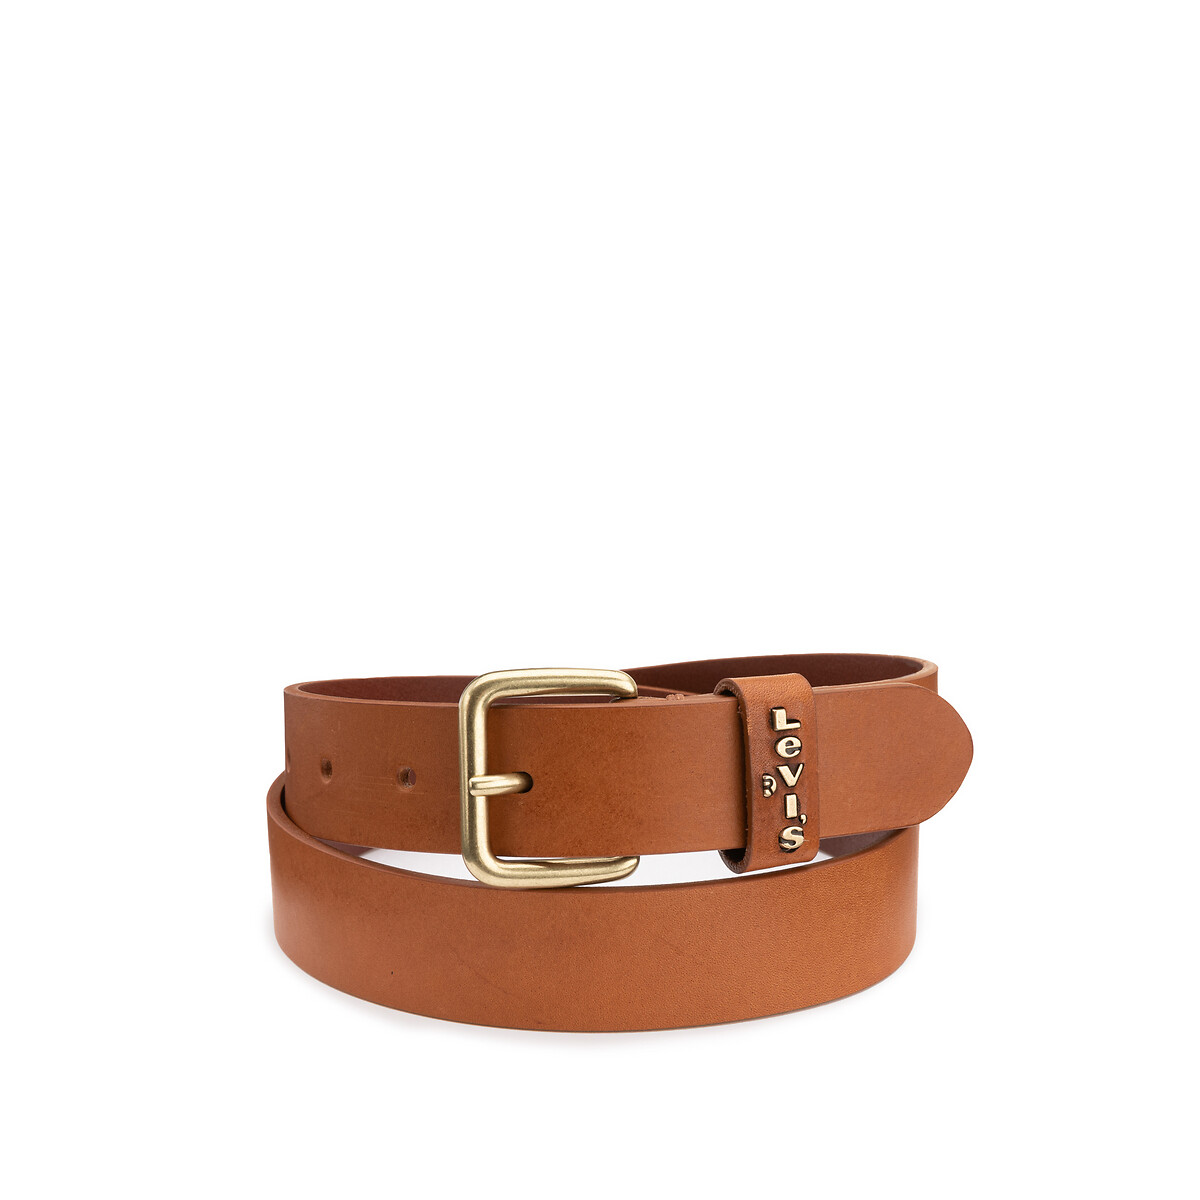 Calypso leather belt, brown, Levi's | La Redoute